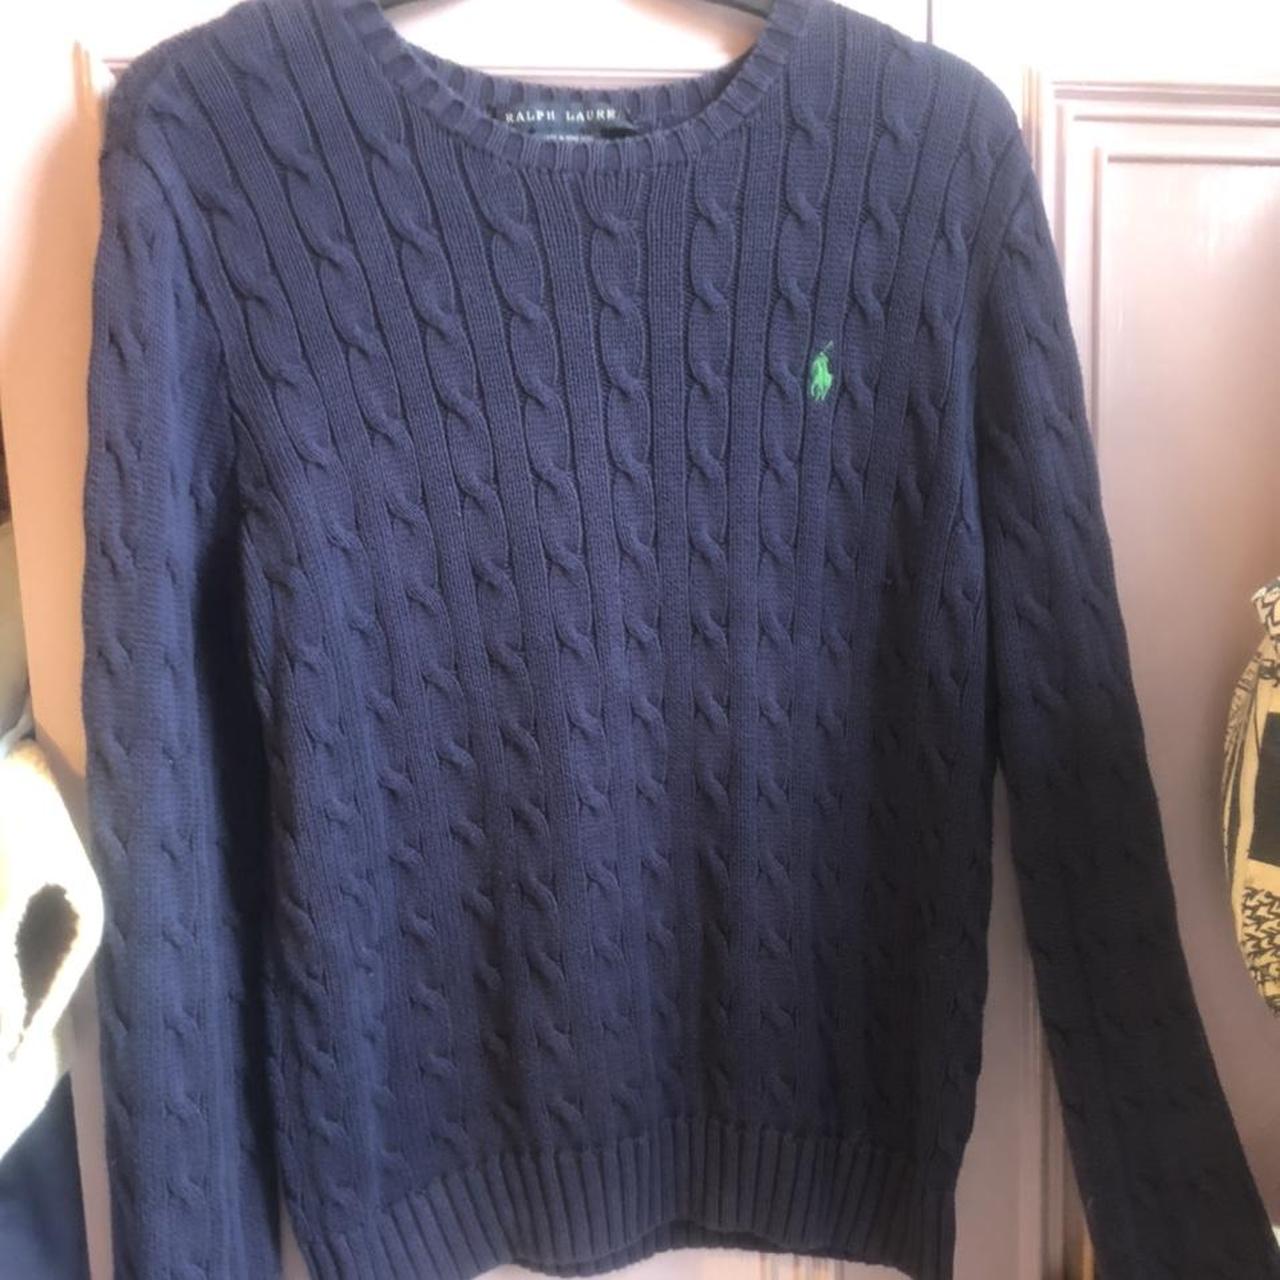 Navy Ralph Lauren cable knit jumper with green logo... - Depop